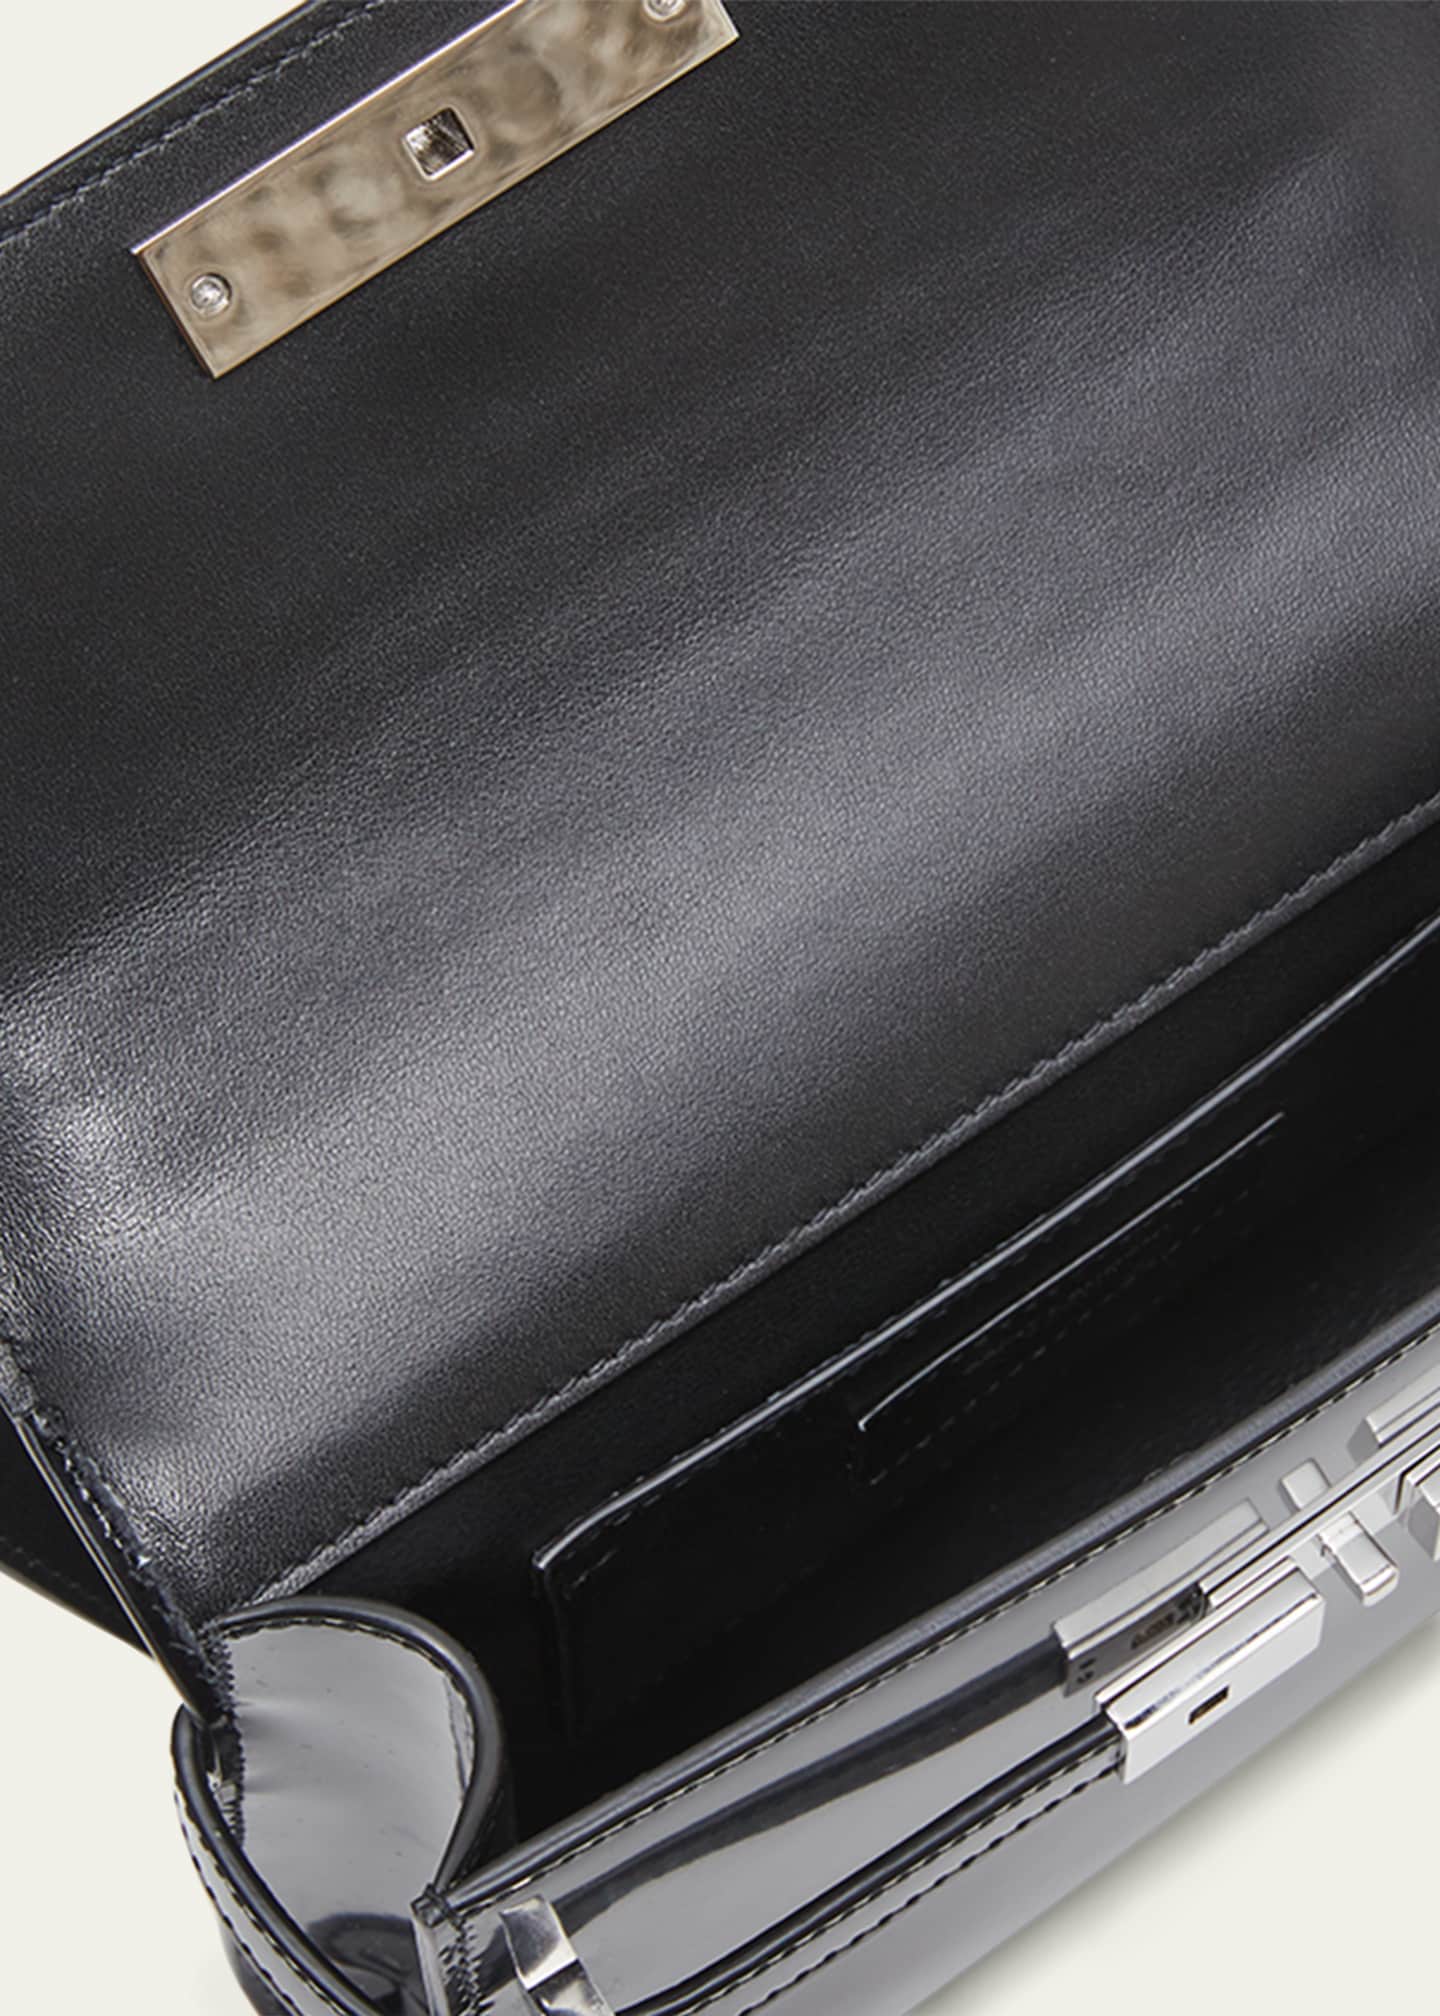 Saint Laurent Manhattan Small YSL Box Leather Shoulder Bag